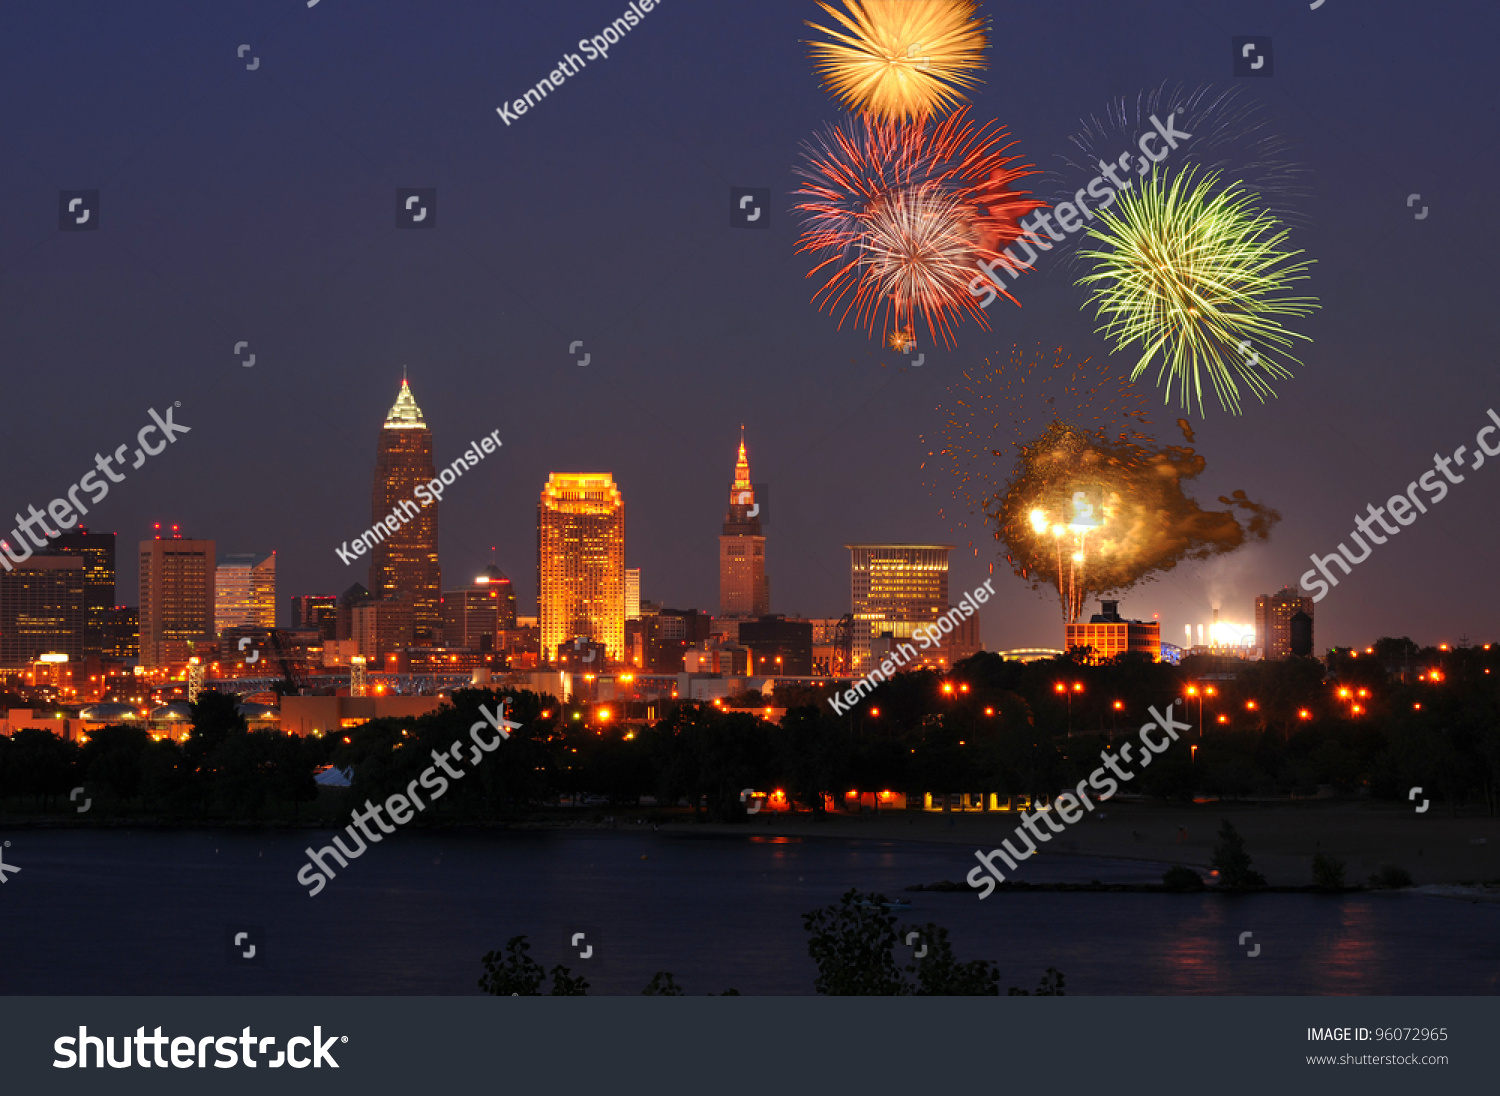 Fireworks Burst Over Downtown Cleveland, Ohio Stock Photo 96072965